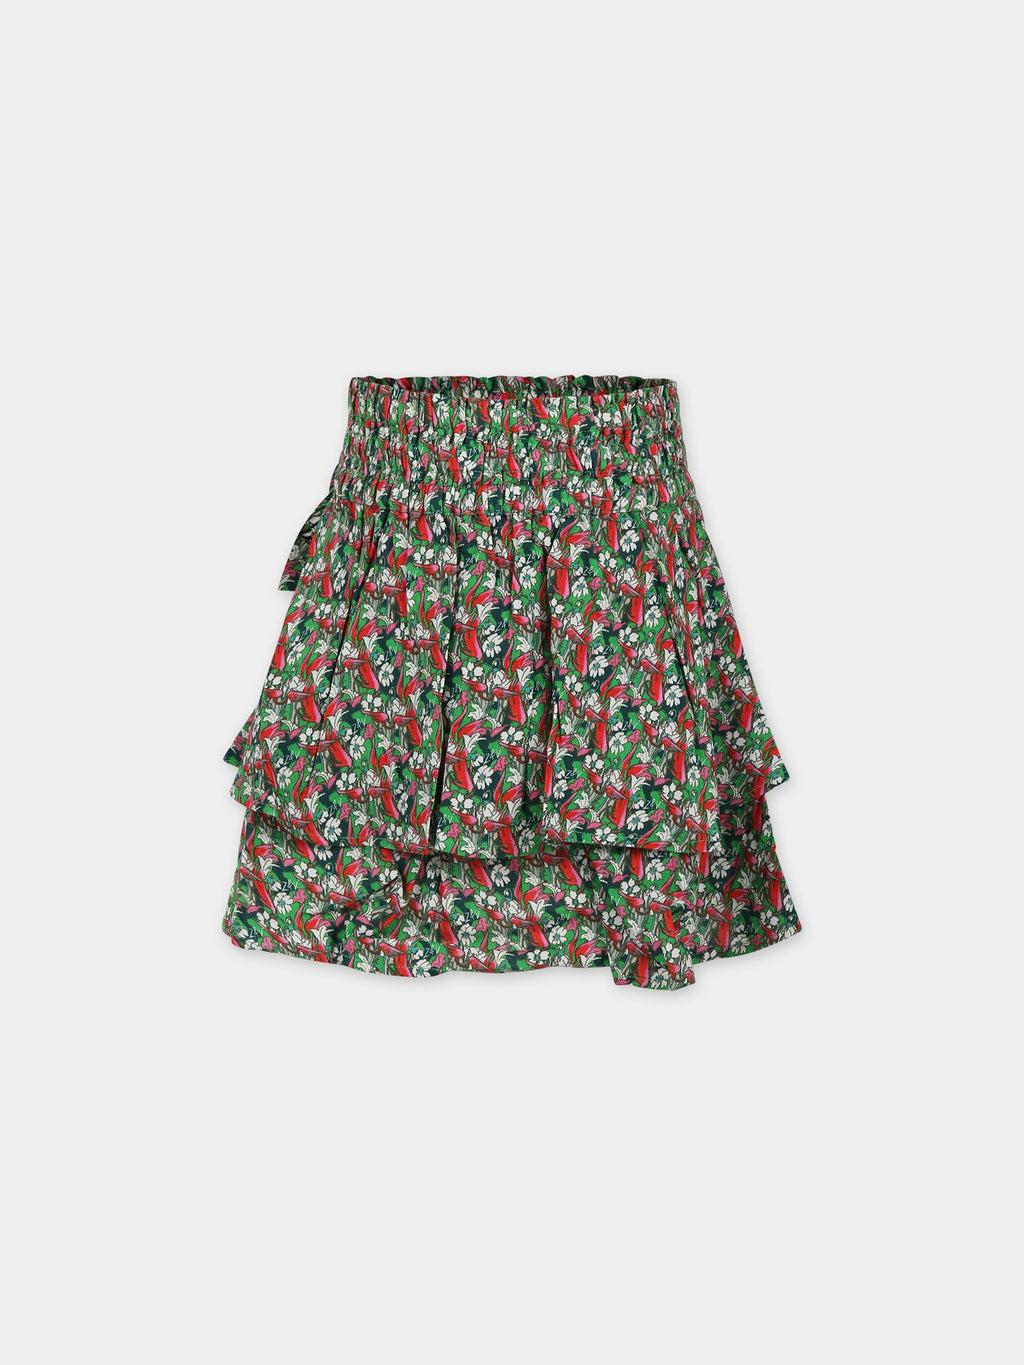 Colorful skirt for girl